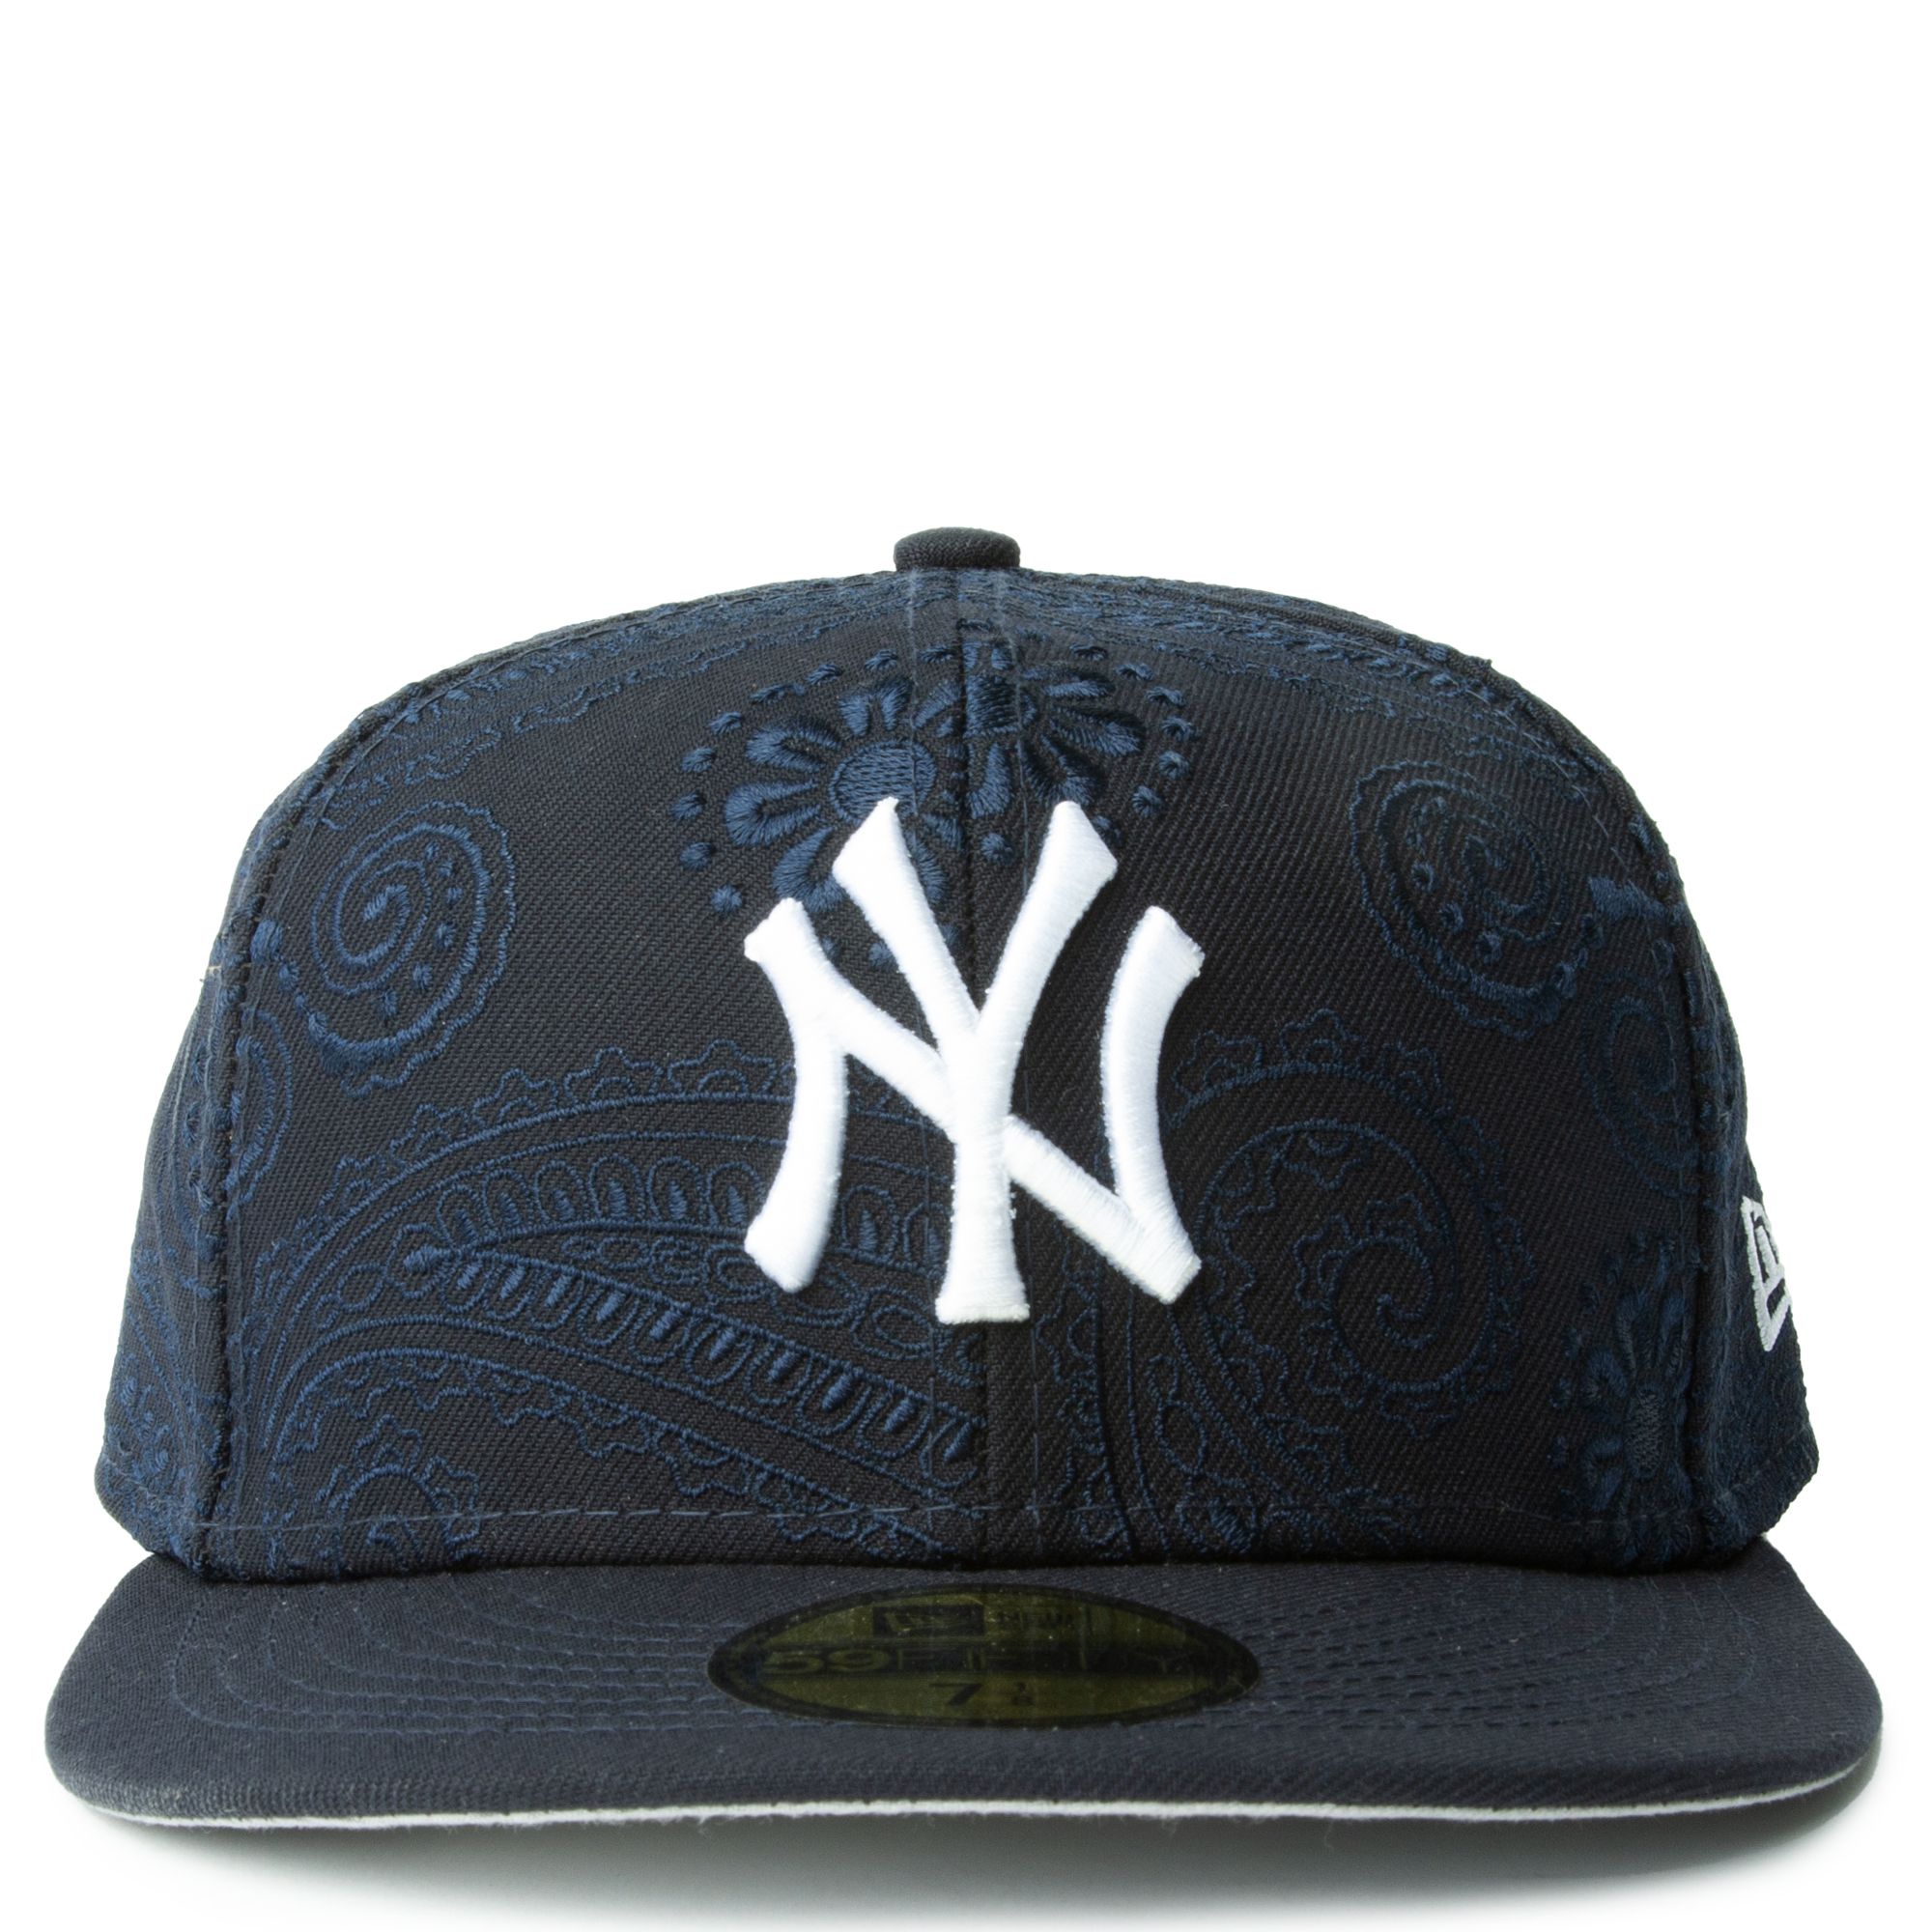 New Era Cap - A new look. The MLB Paisley Elements